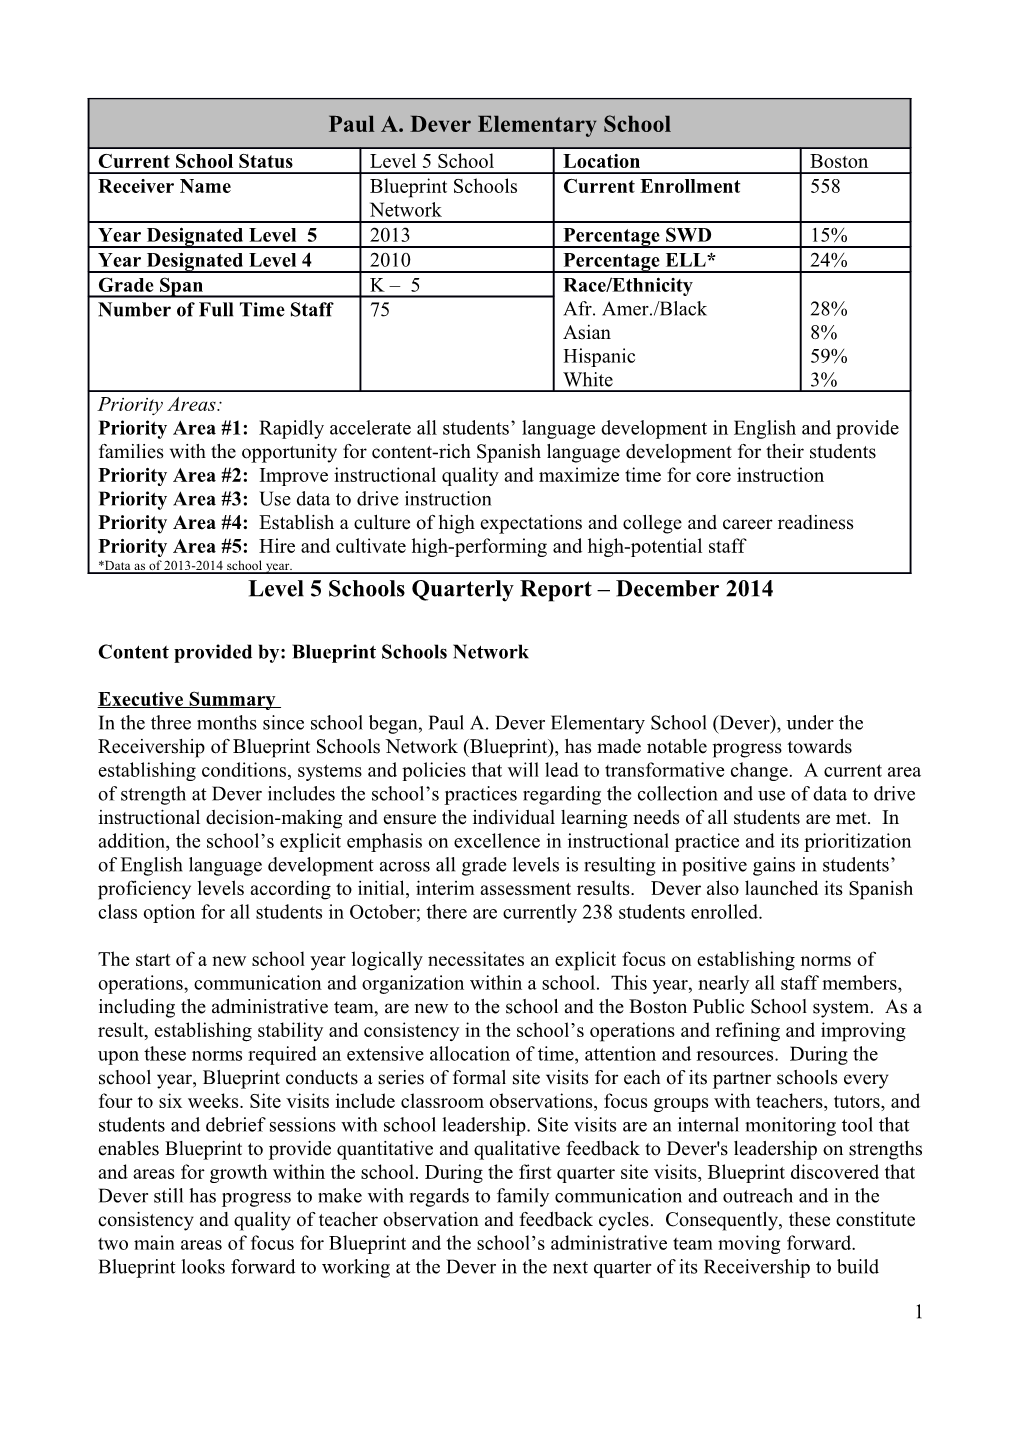 Level 5 Schools Quarterly Report December 2014